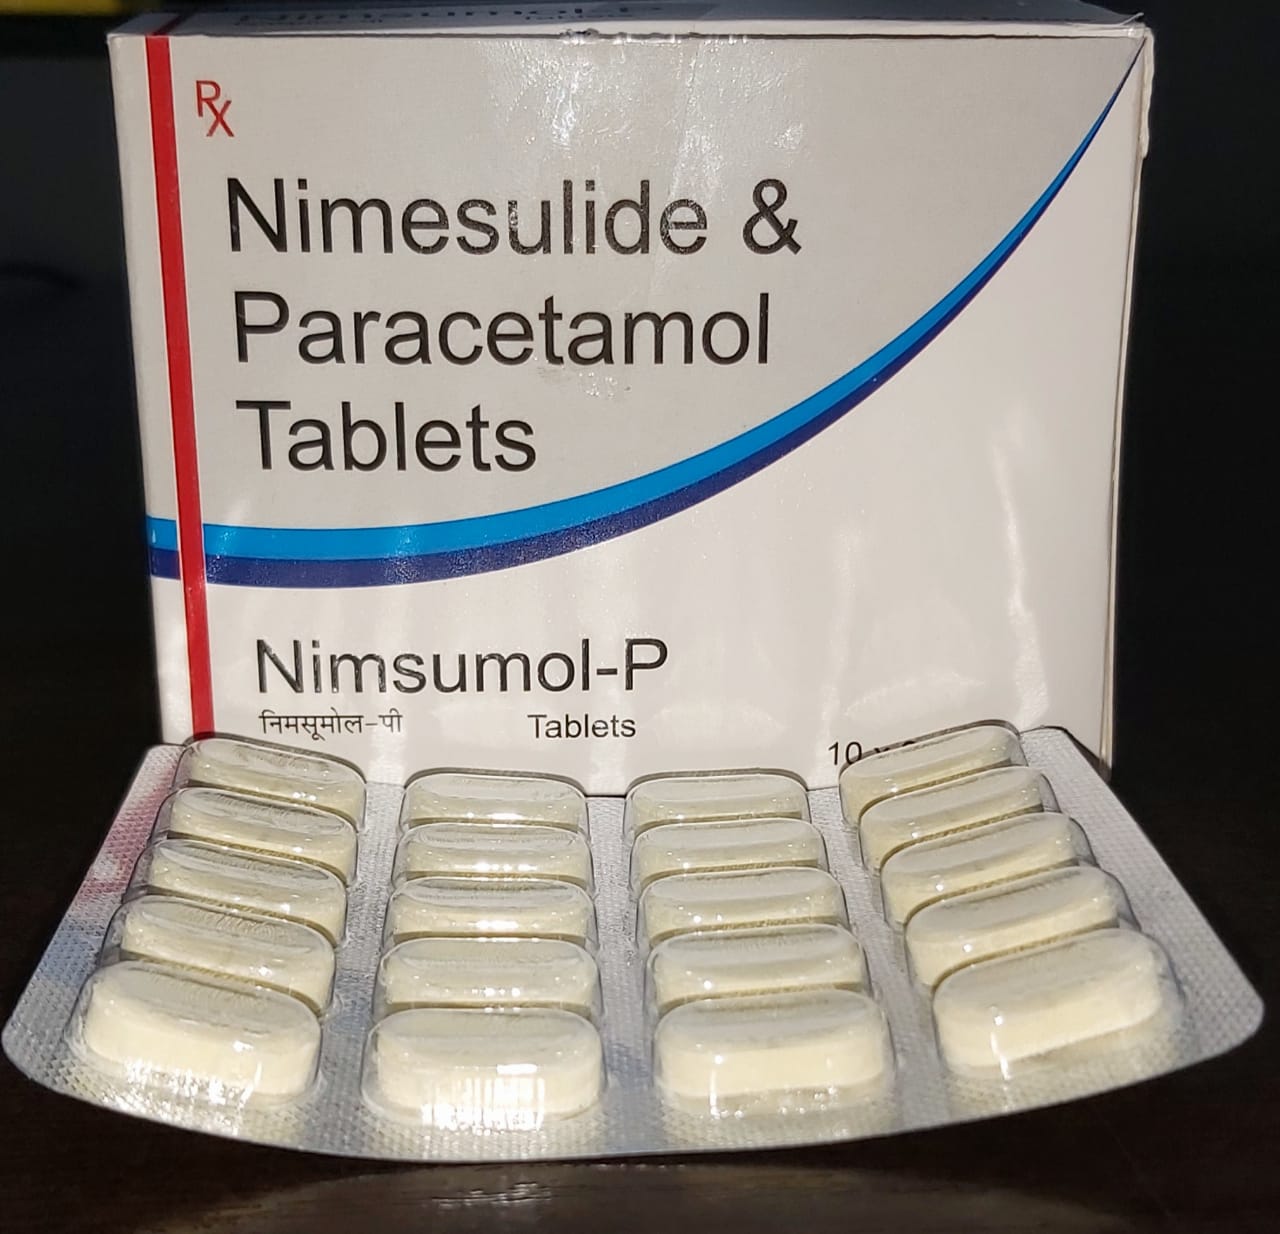 Nimsumol-P Tablets